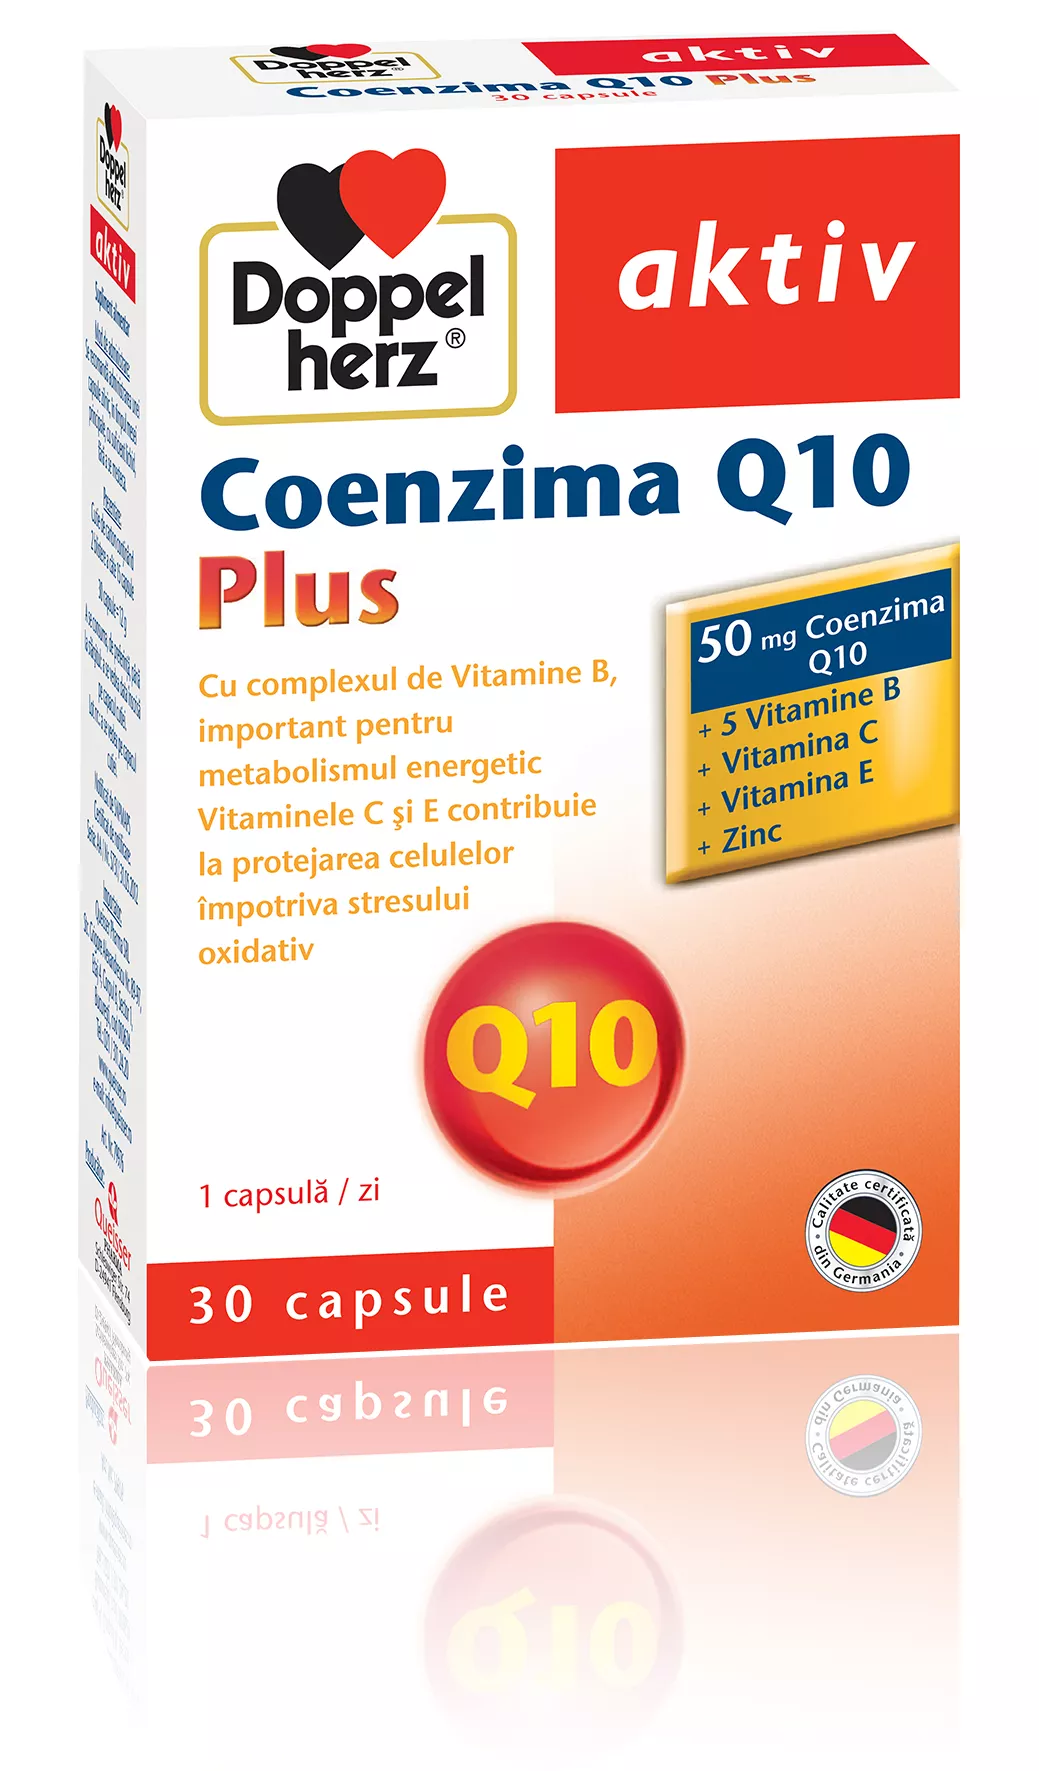 DOPPELHERZ AKTIV COENZIMA Q10 PLUS, [],farmacom.ro